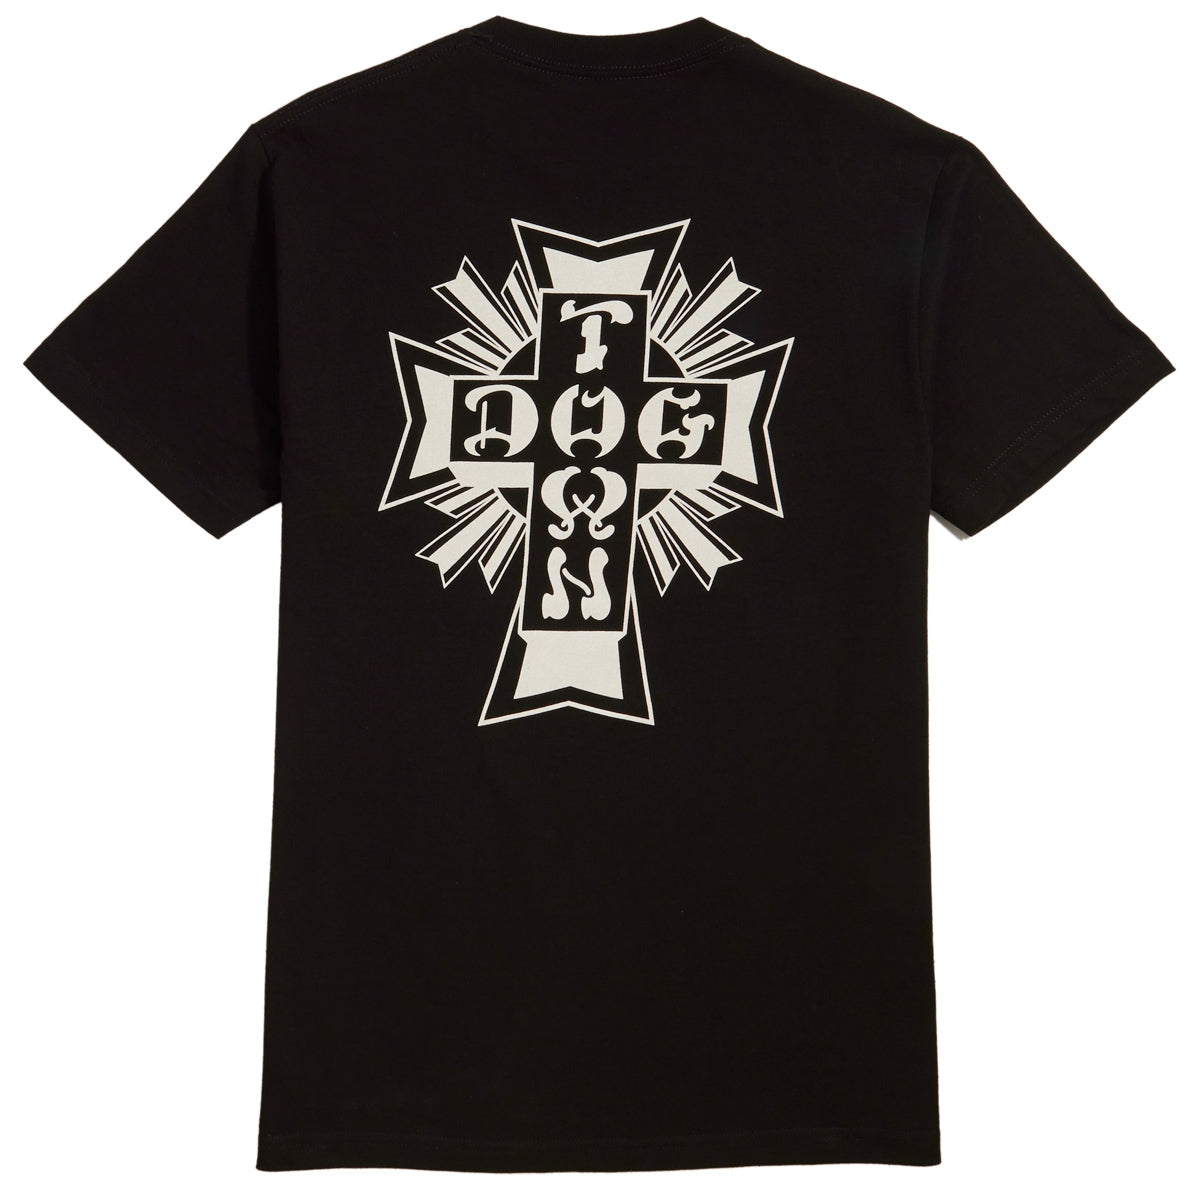 Dogtown Cross Logo T-Shirt - Black/White image 1